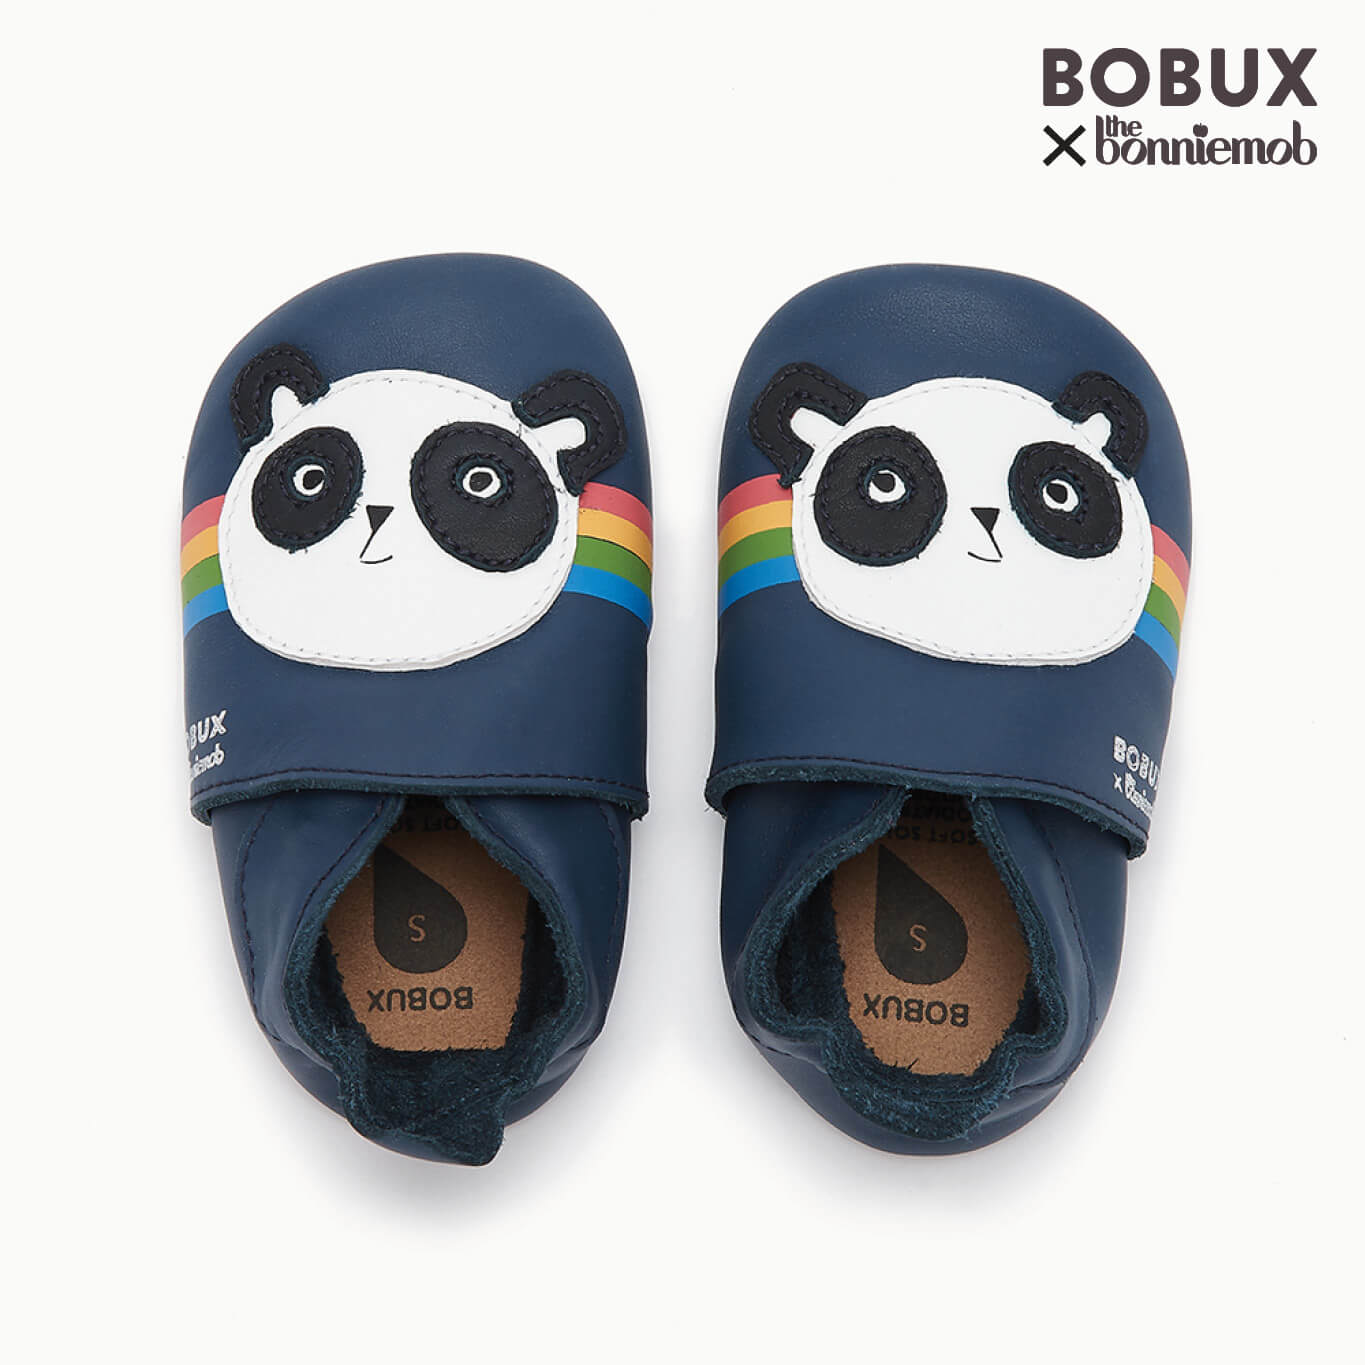 Bobux X Bonnie Mob Panda Soft Sole Baby 